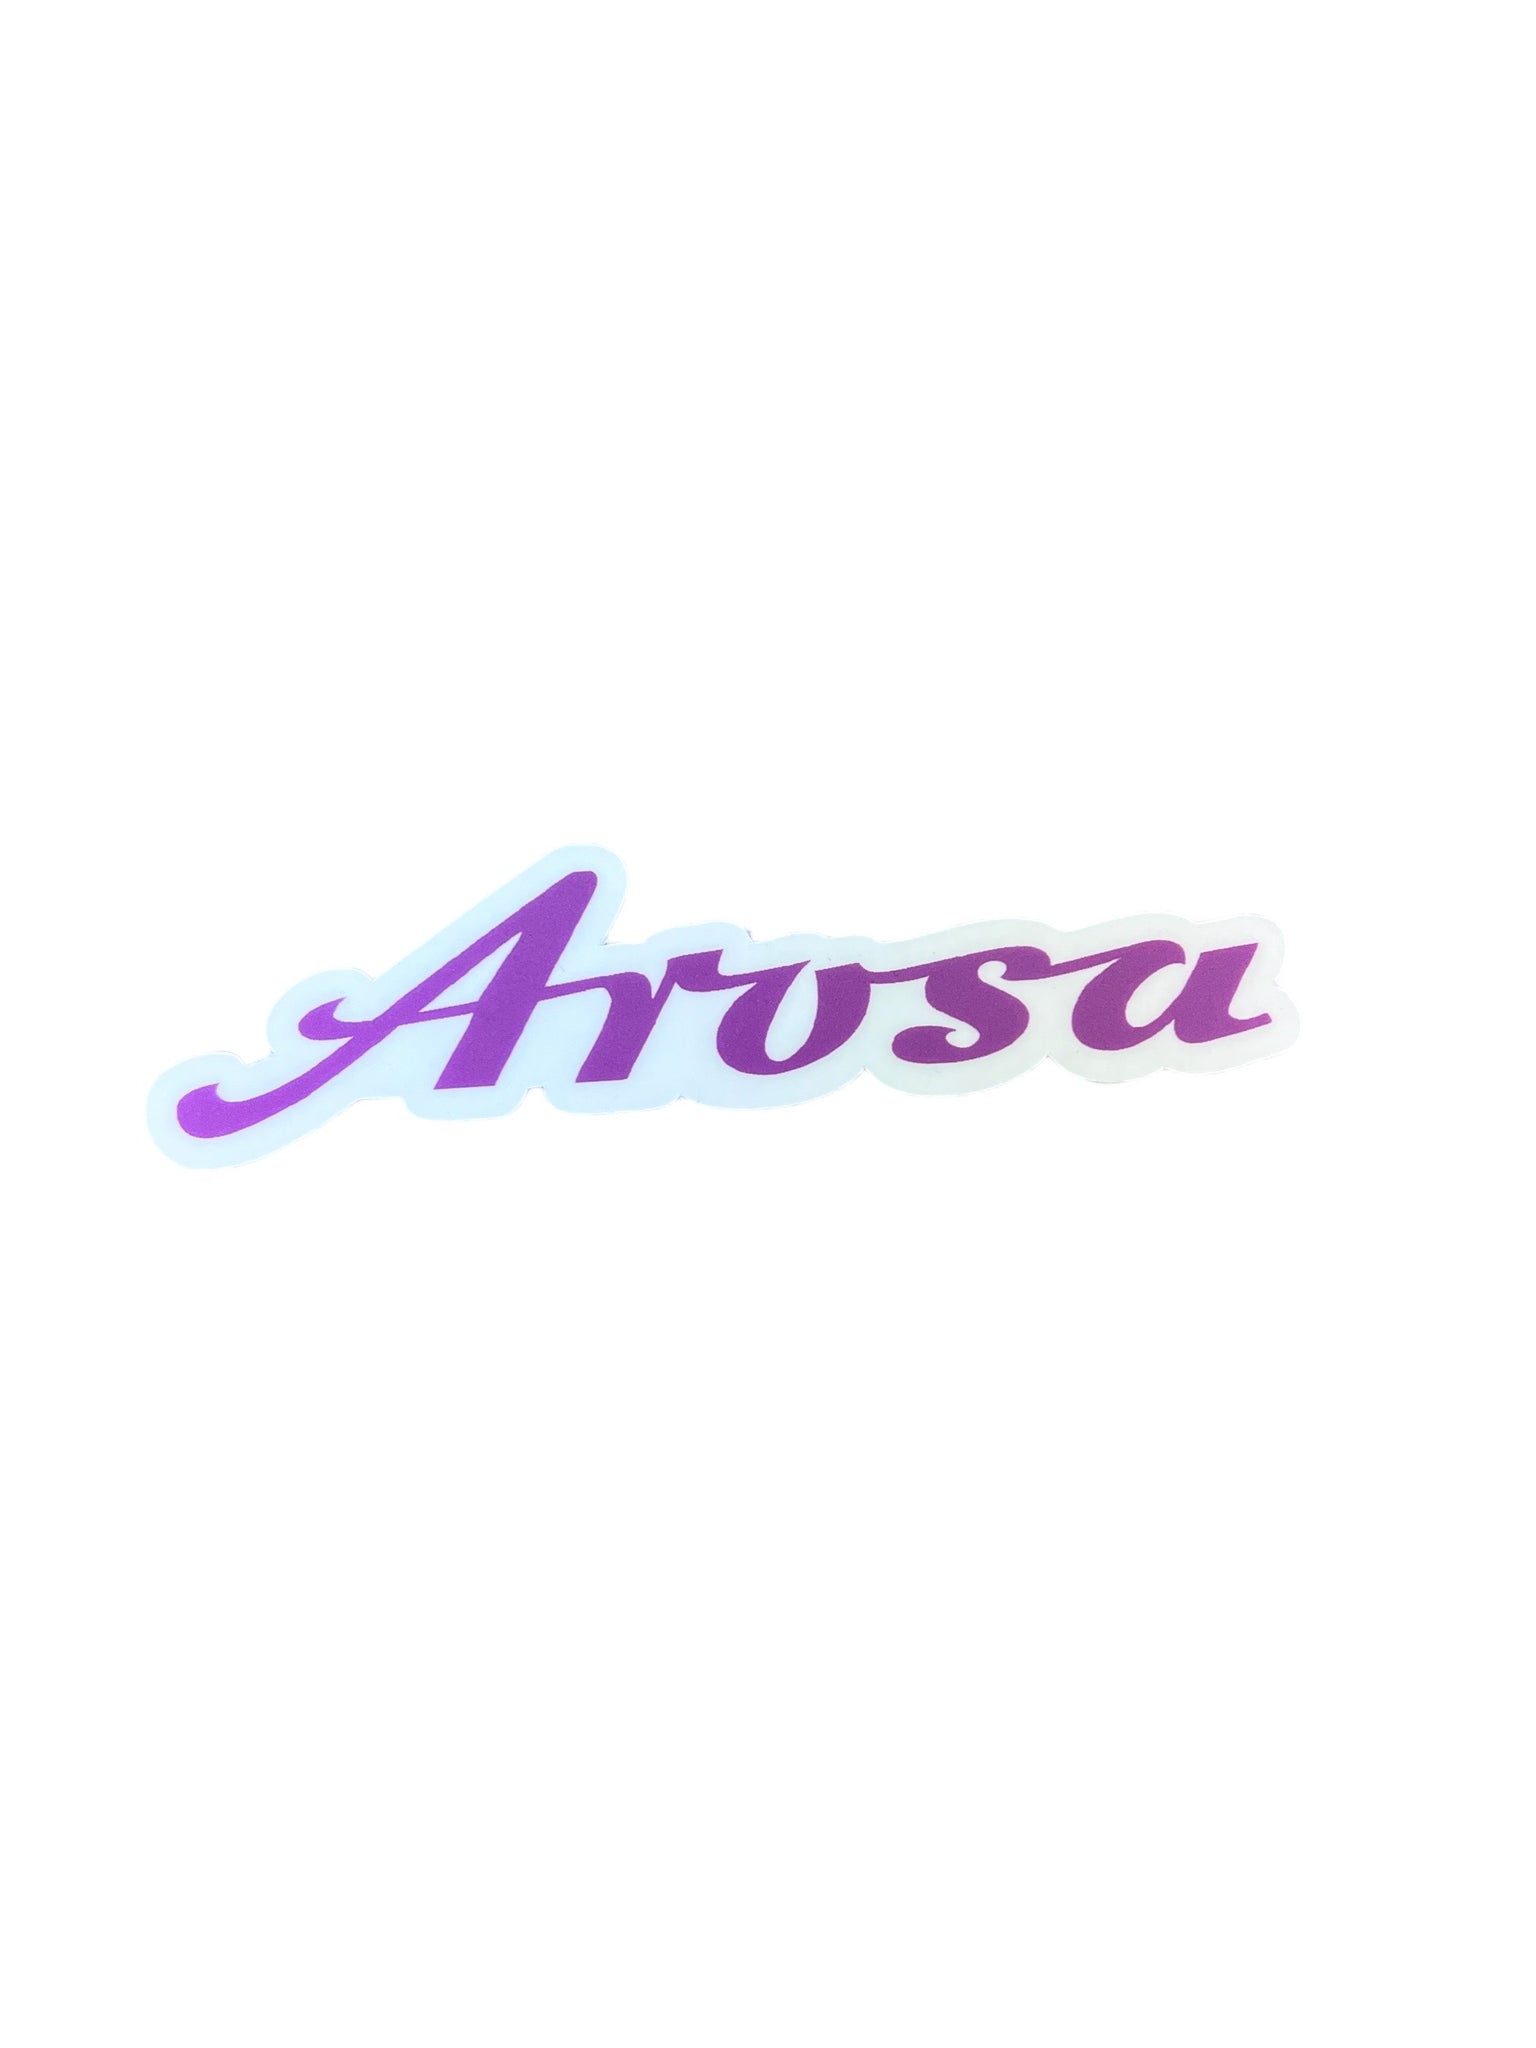 Aufkleber Arosa